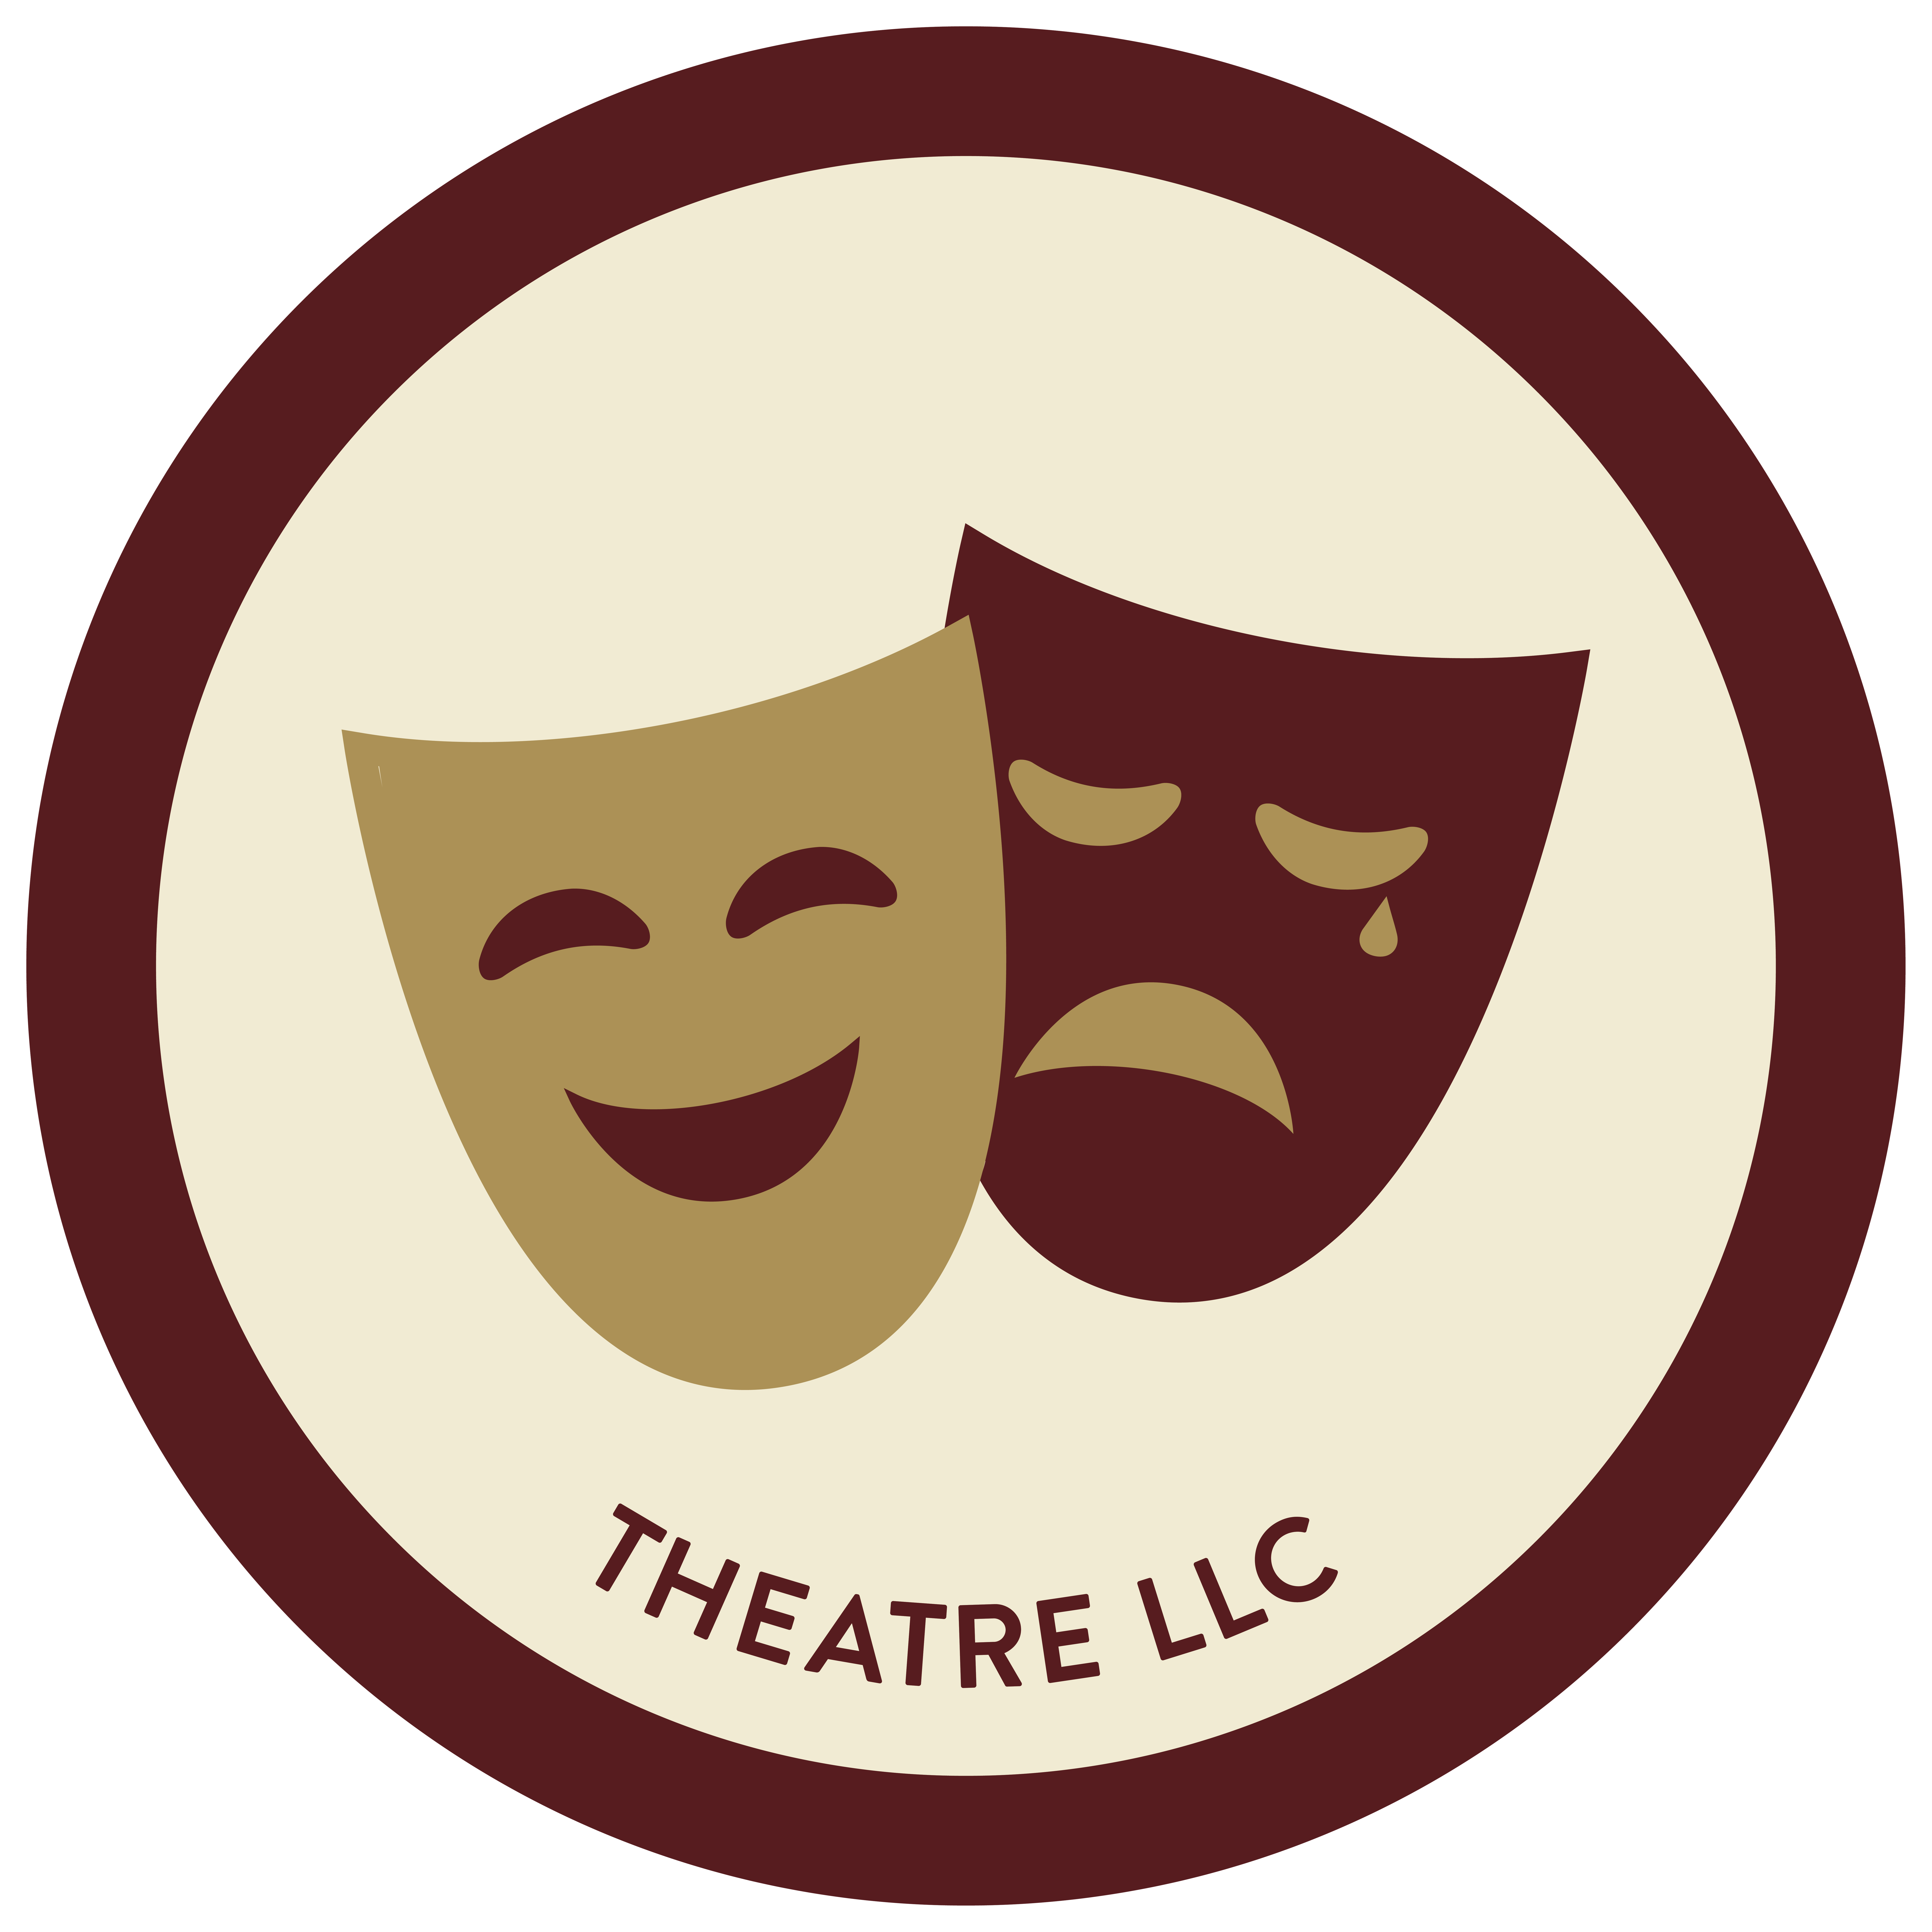 Theatre LLC